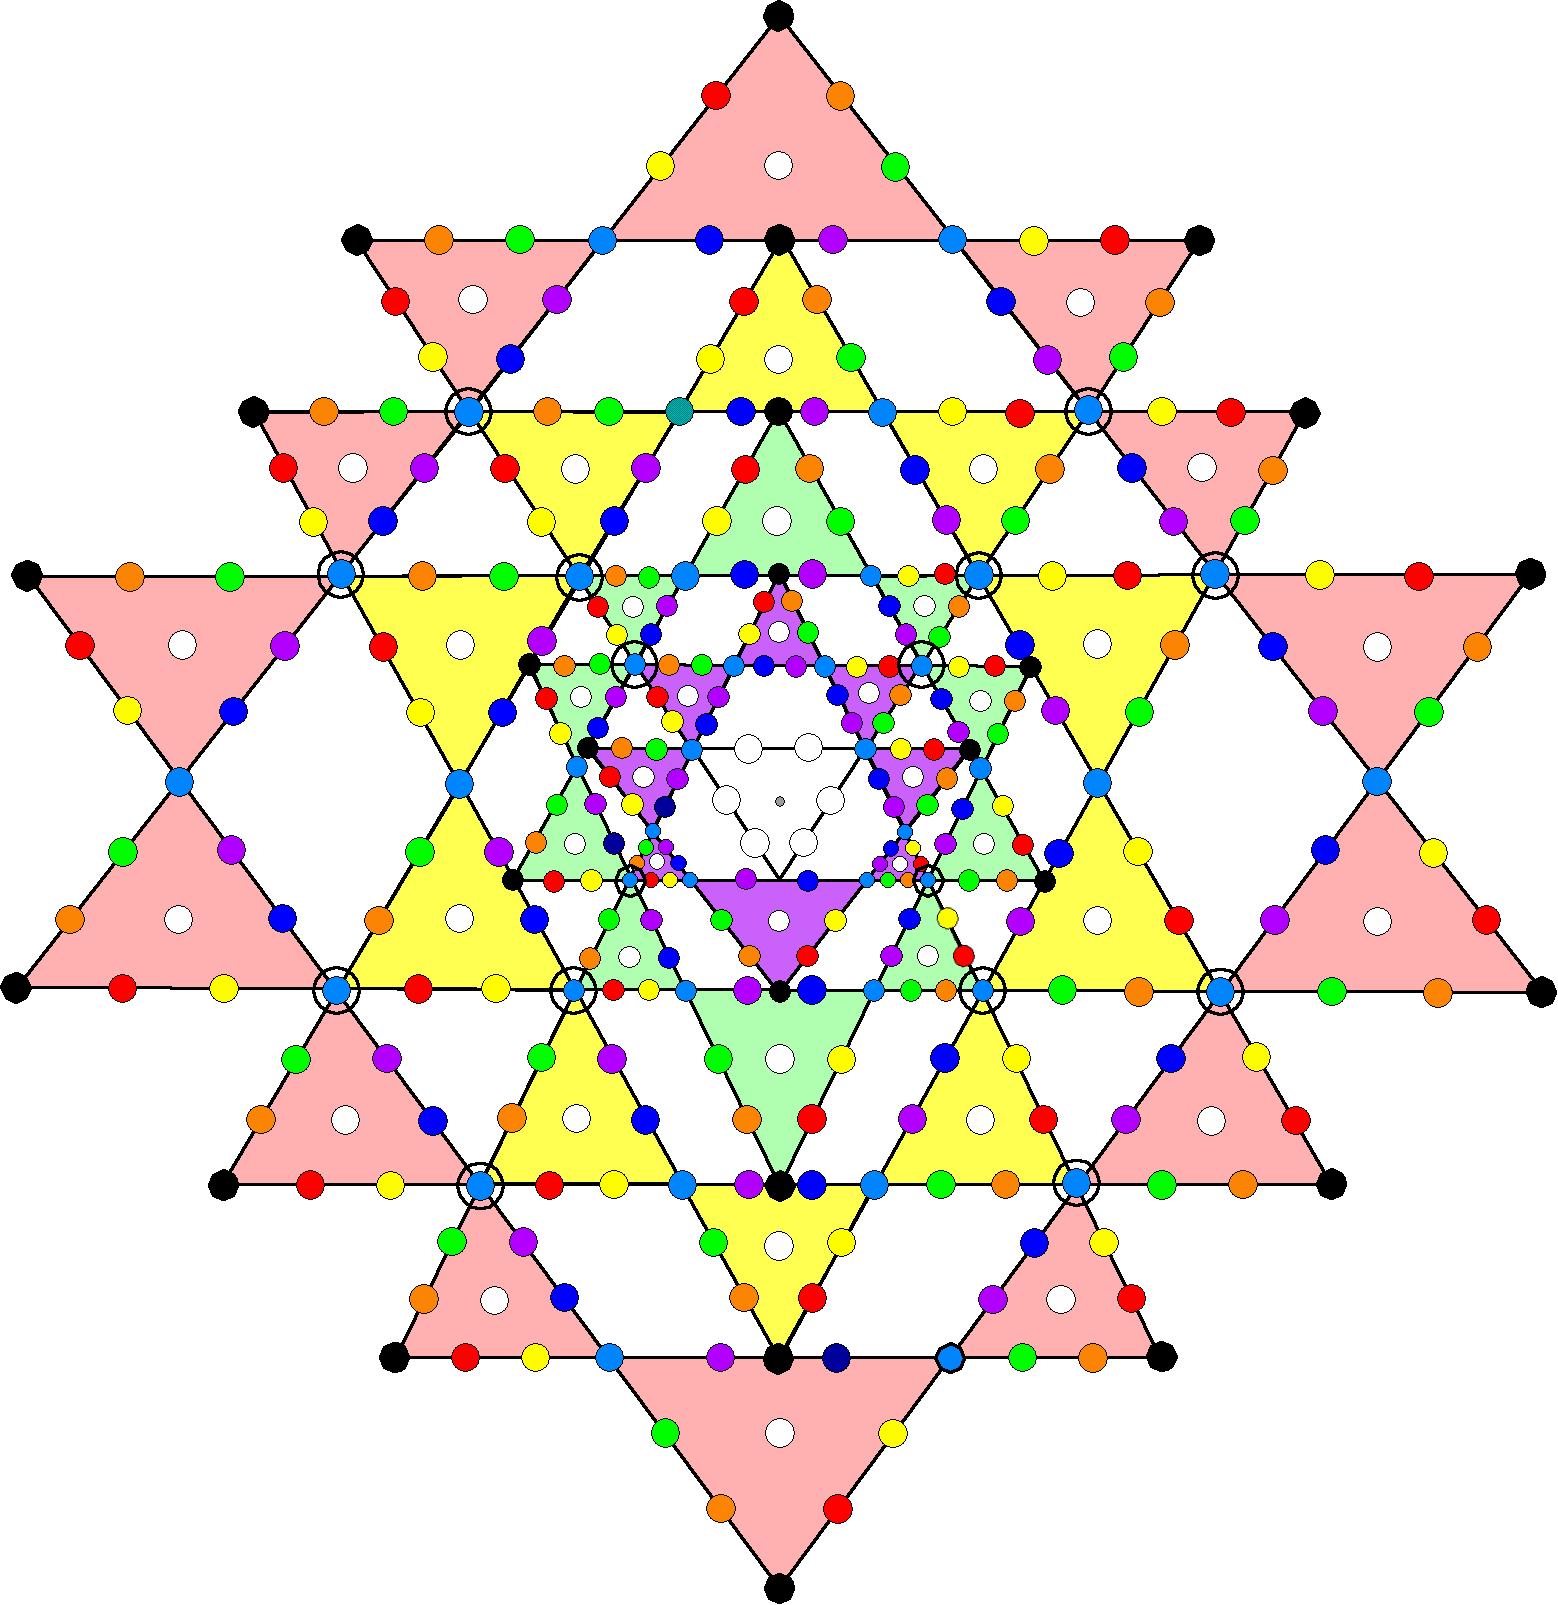 336 yods line 42 triangles in 3-d Sri Yantra